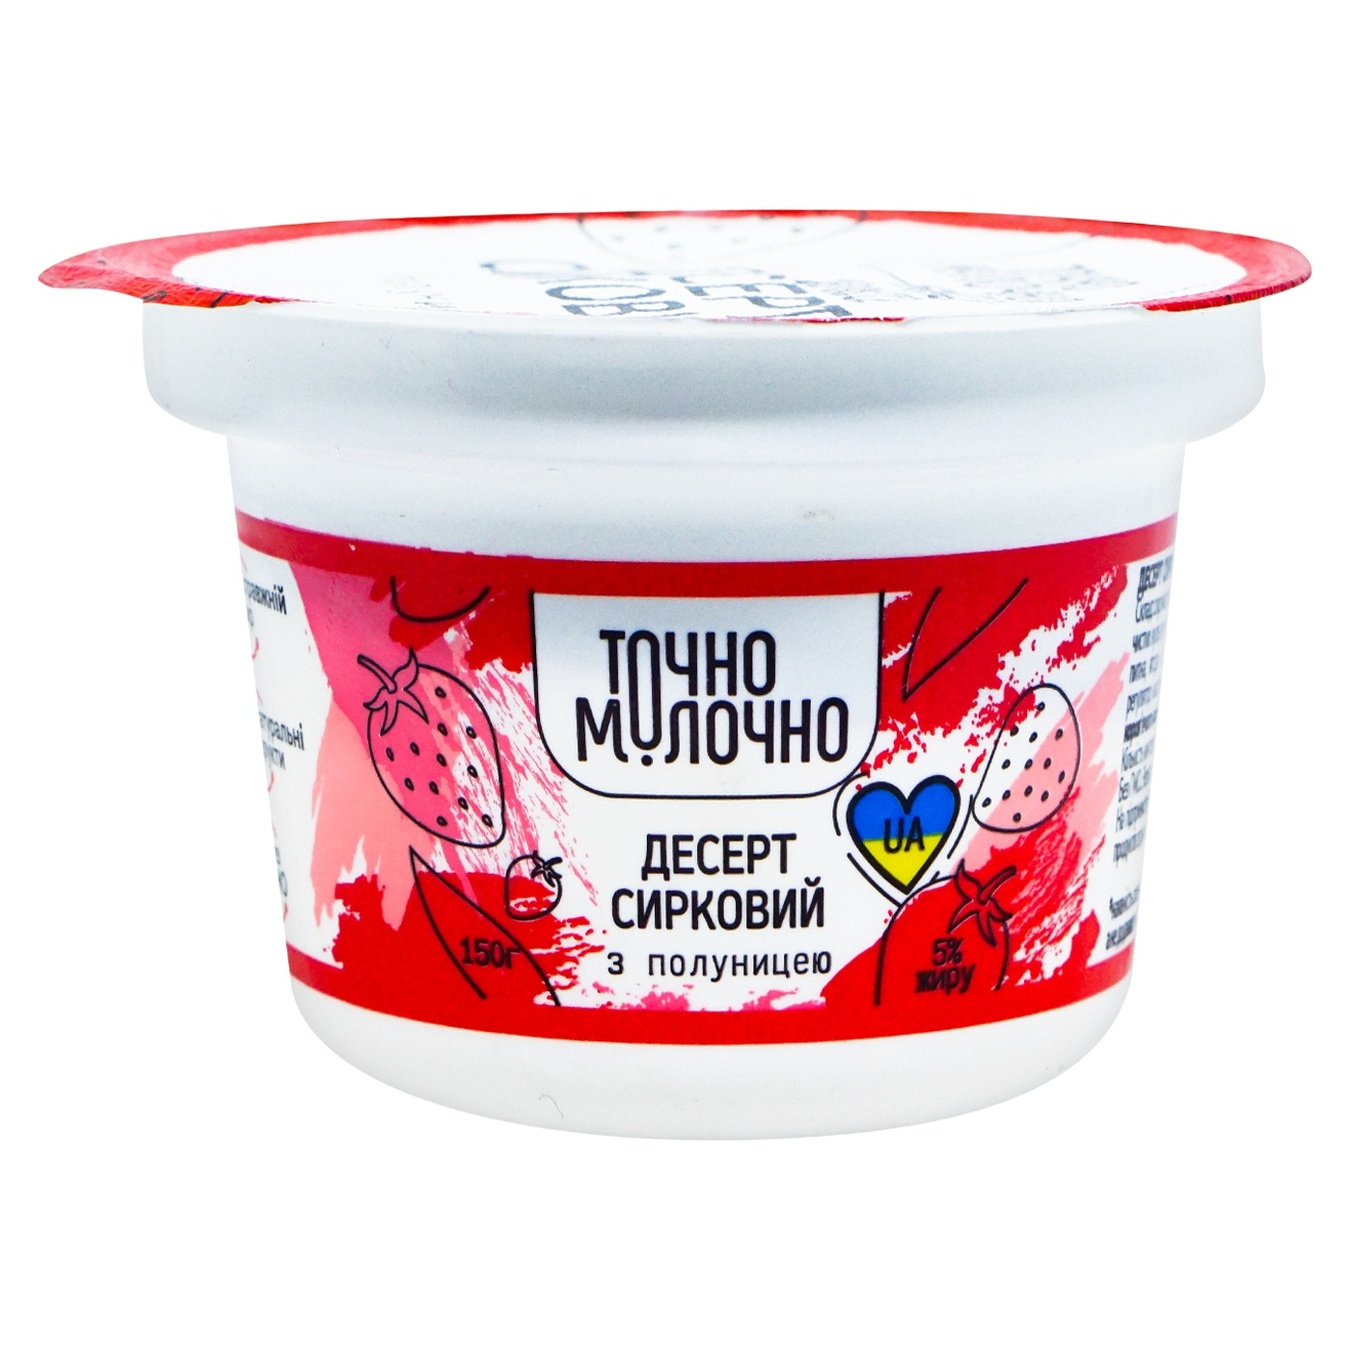 Cottage cheese dessert Tachono Molochno with strawberry jam 5% 150g